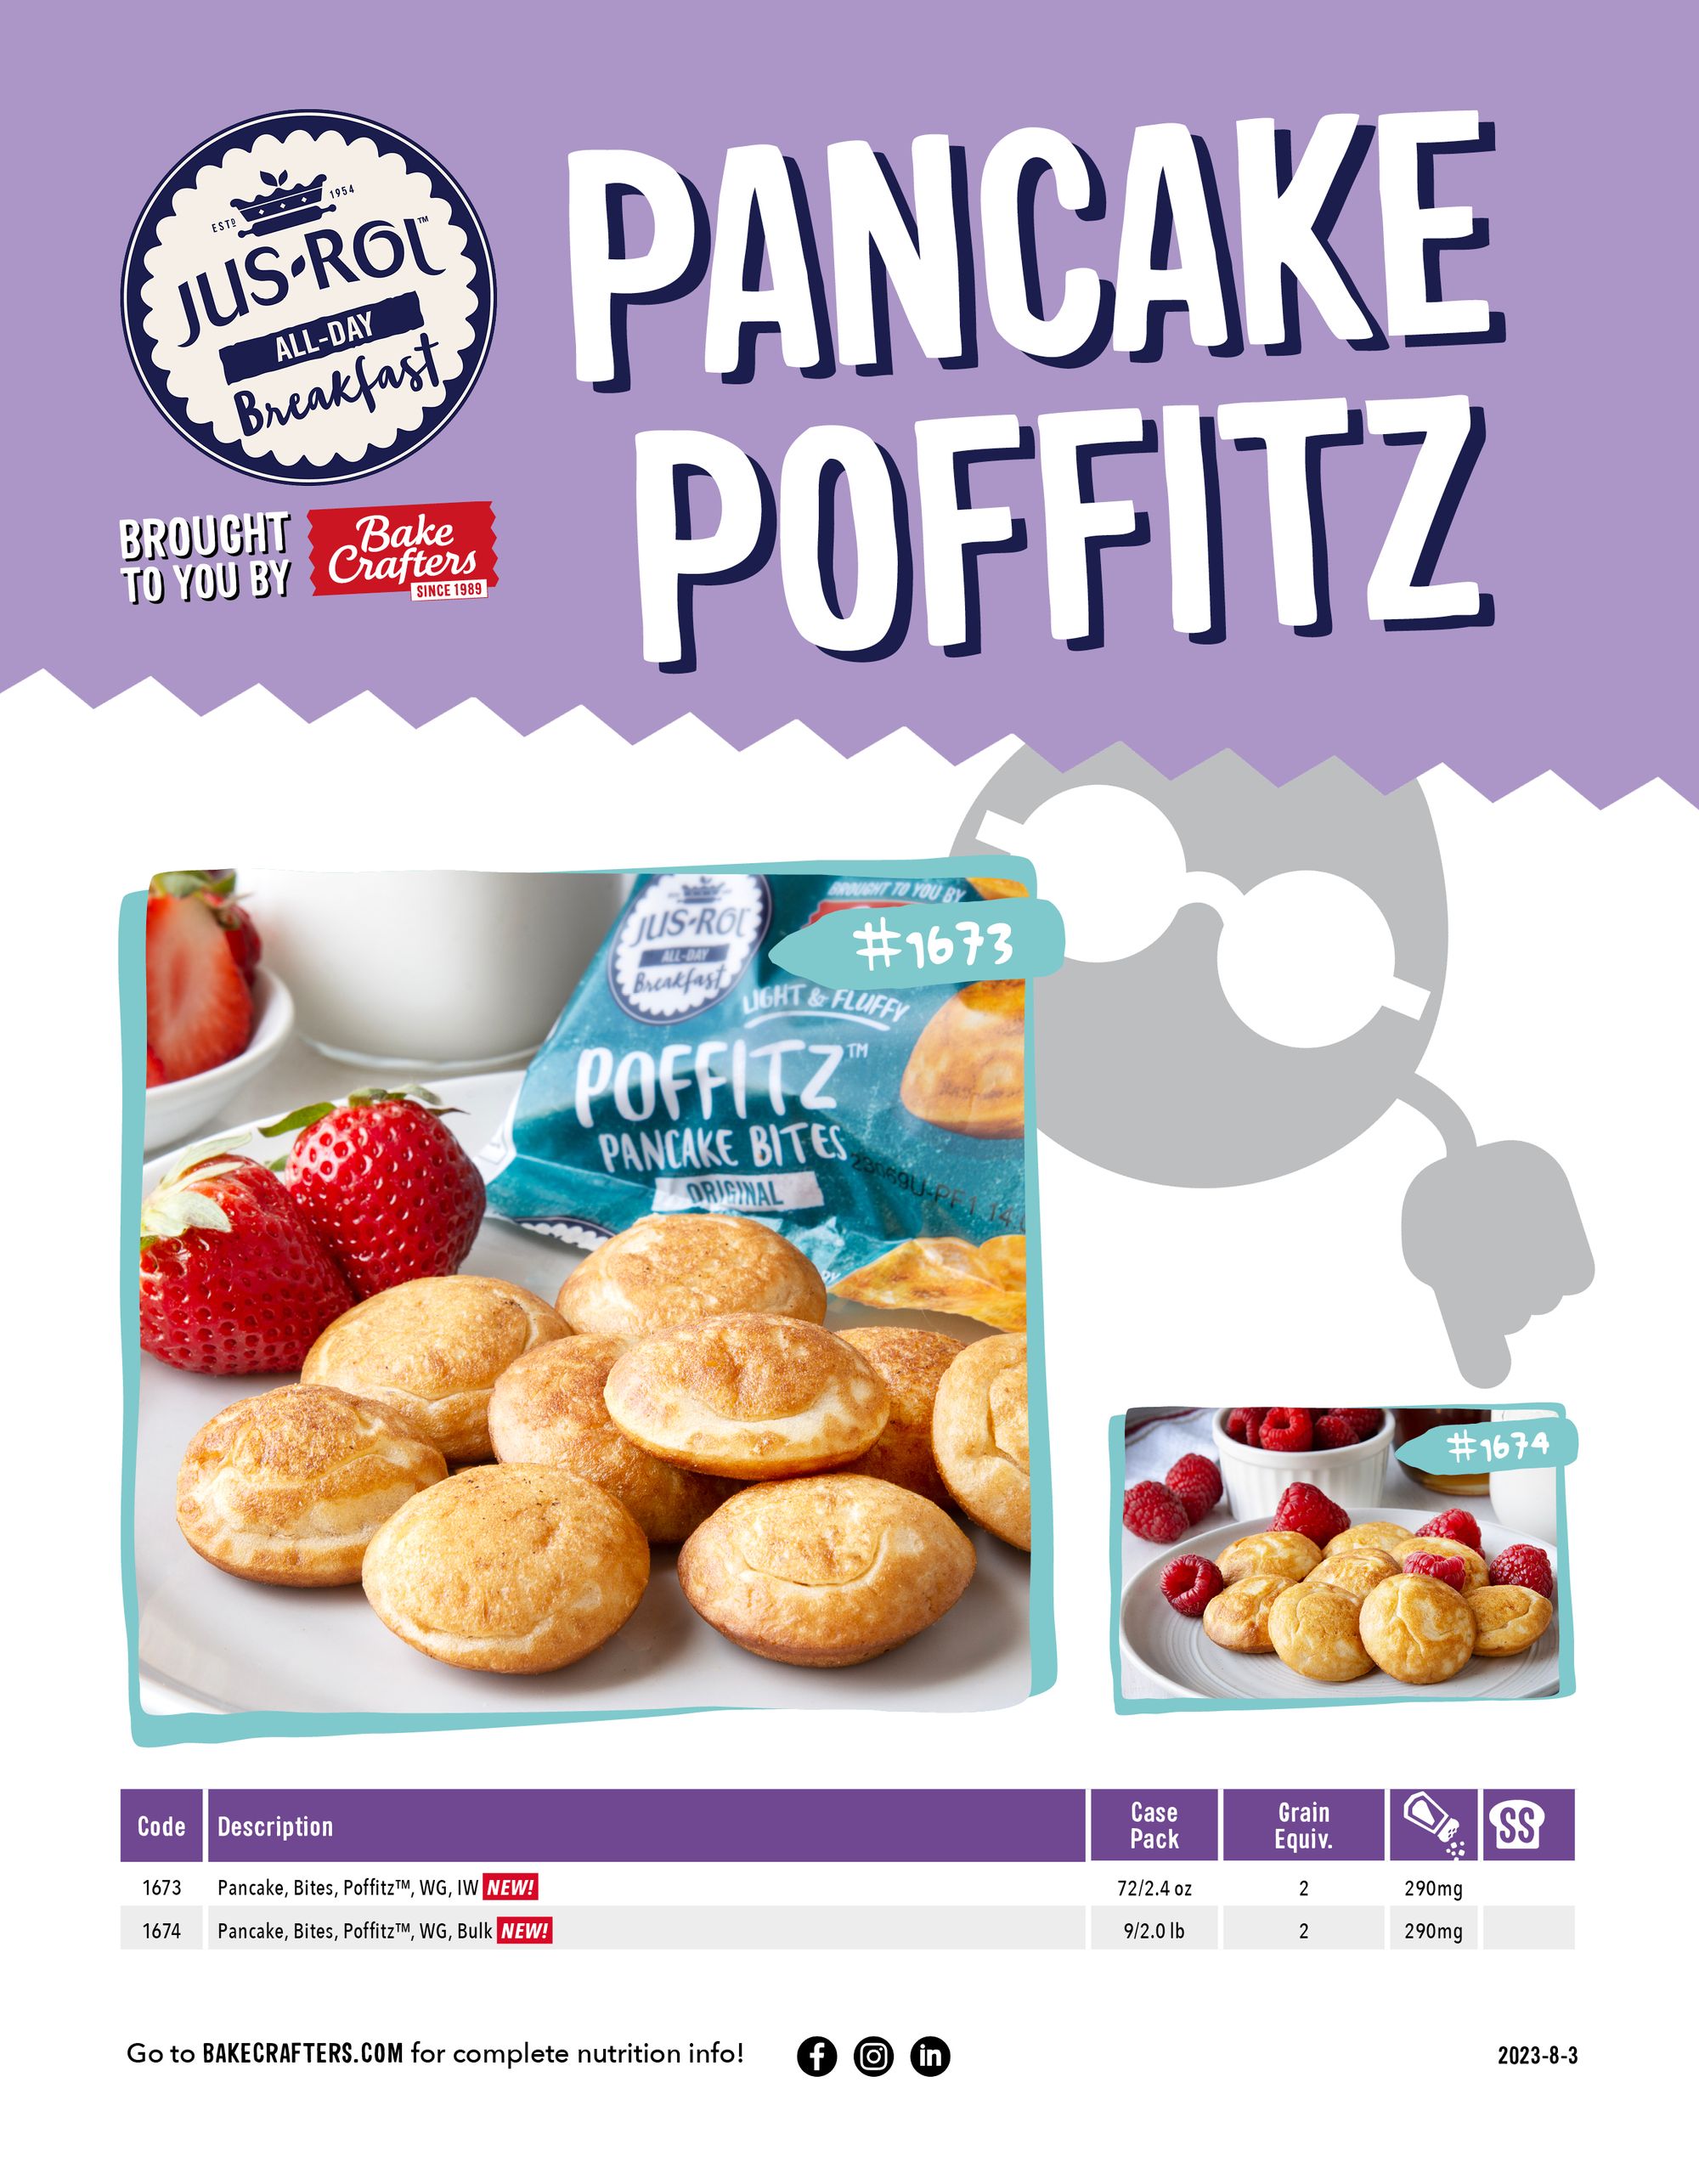 Poffitz! Perfect Pancake Bites